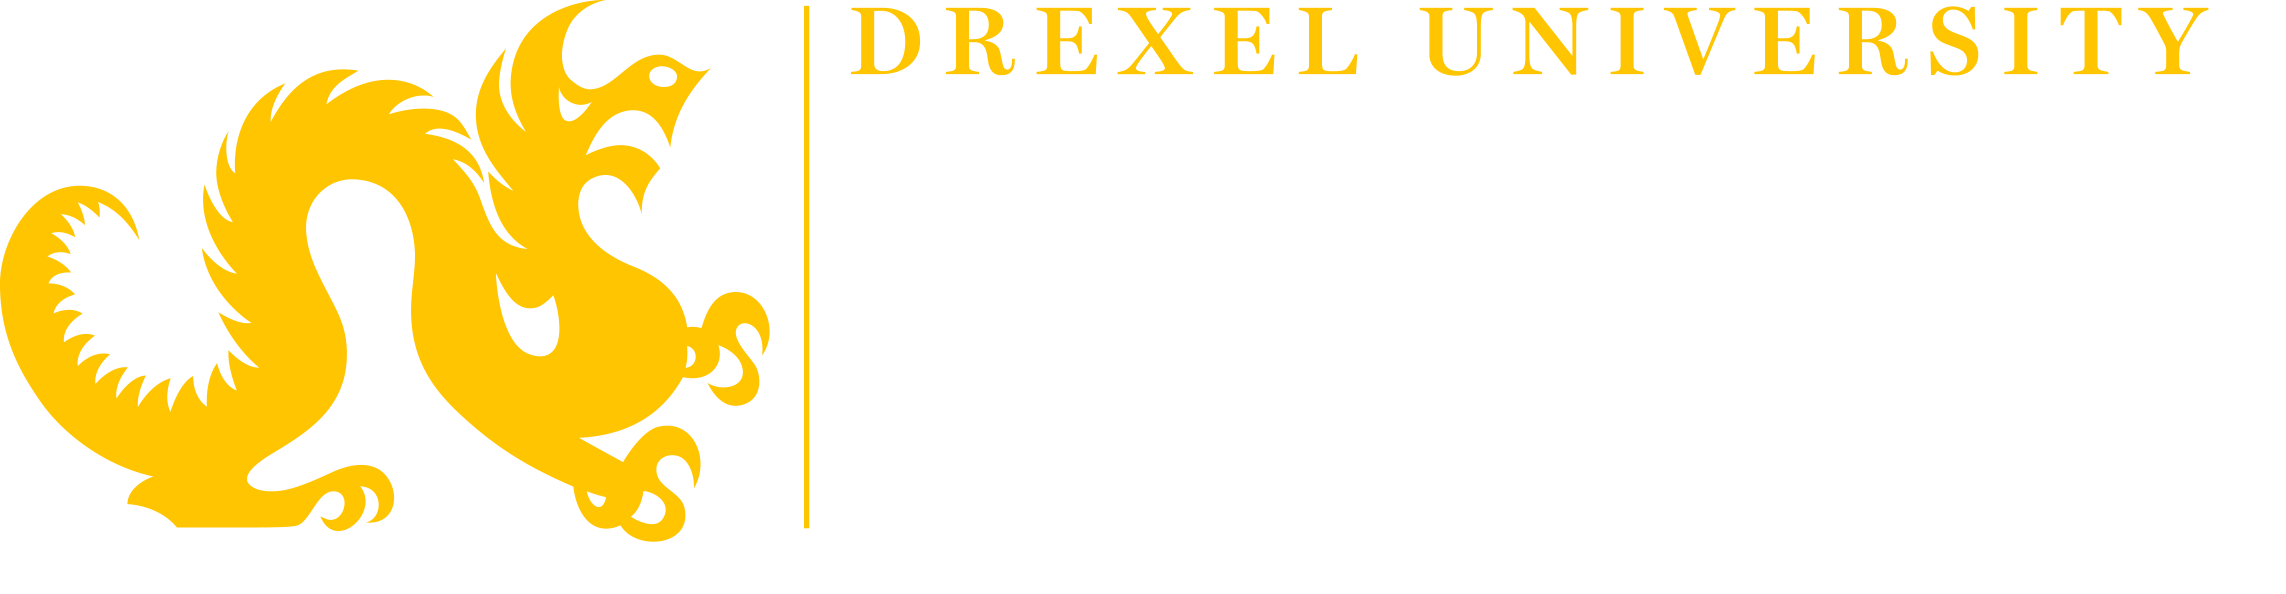 College of Engineering Philadelphia